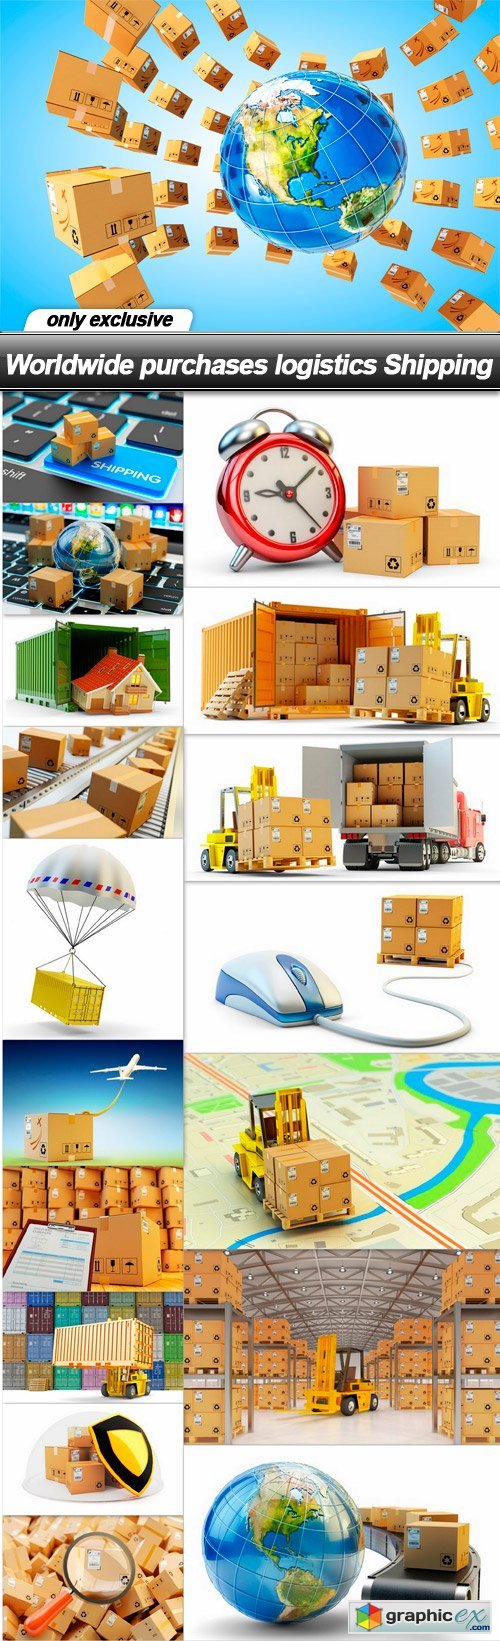 Worldwide purchases logistics Shipping - 18 UHQ JPEG